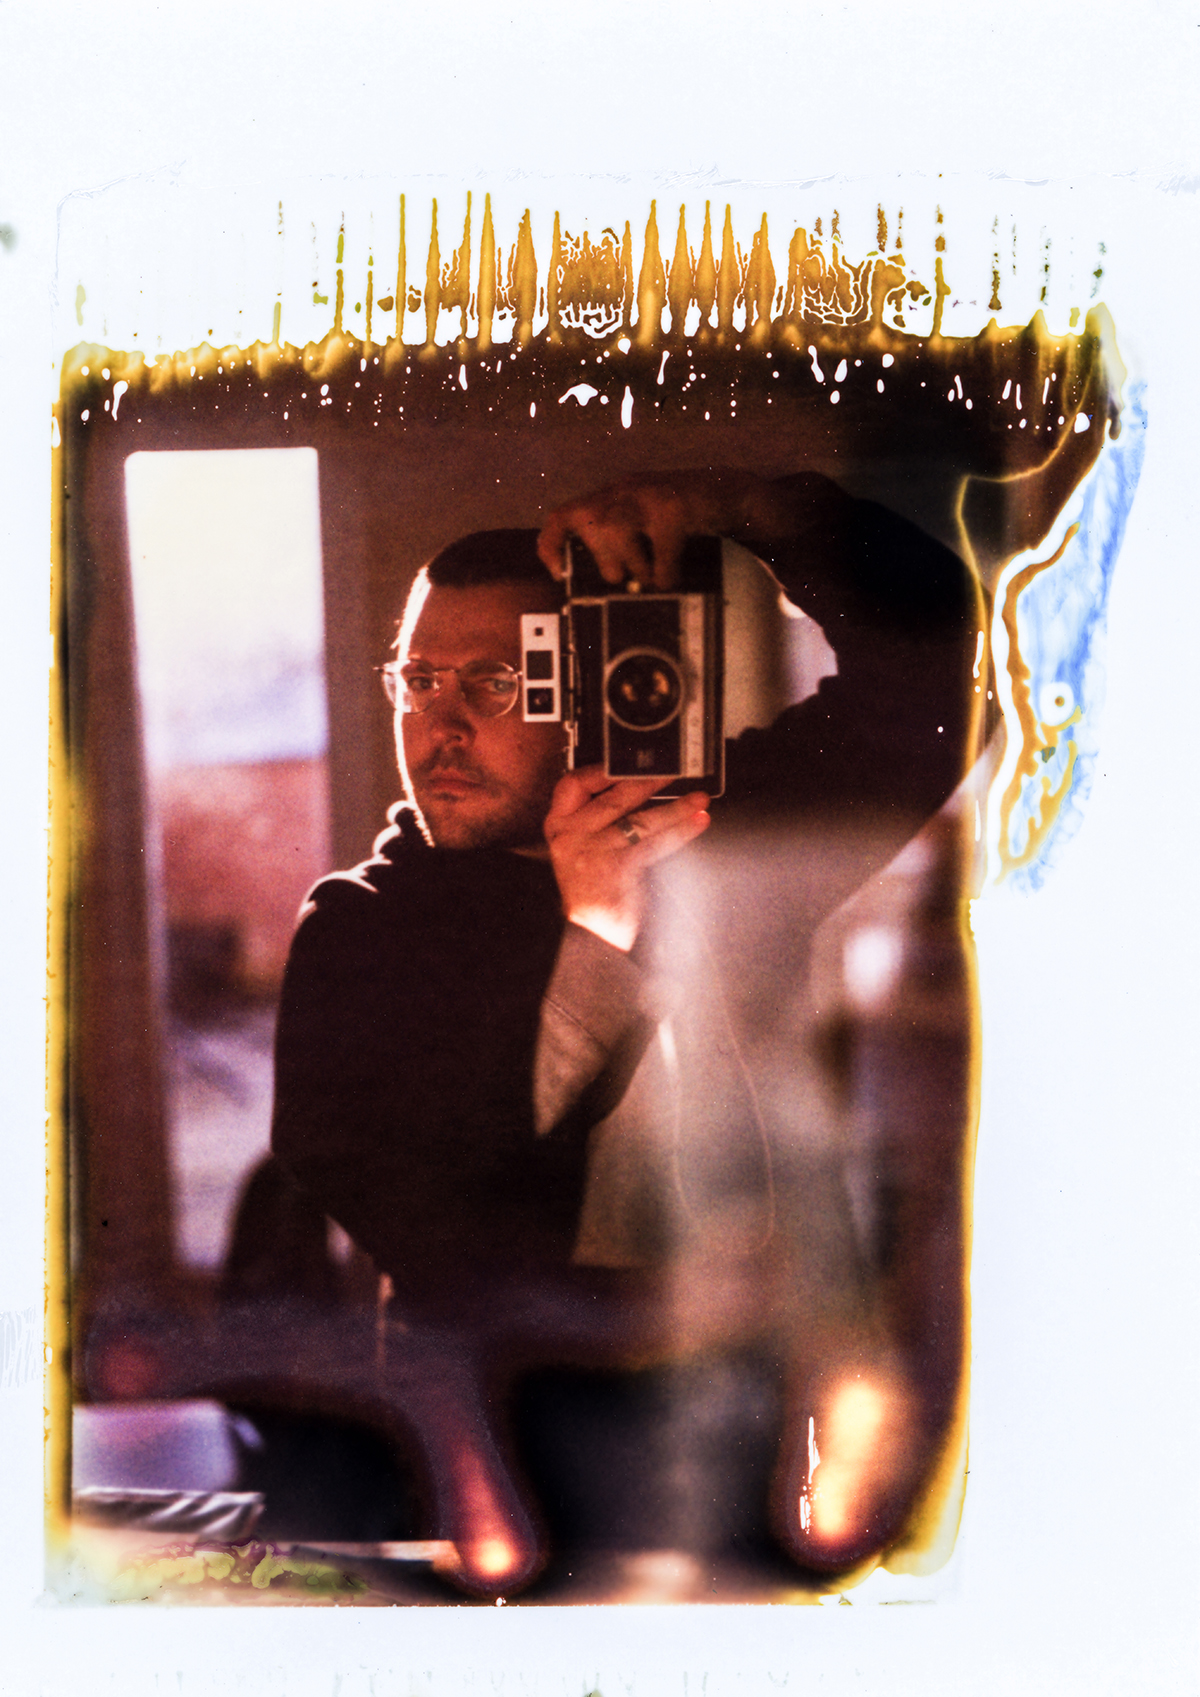 Self-portrait [Polaroid Land Camera 190]